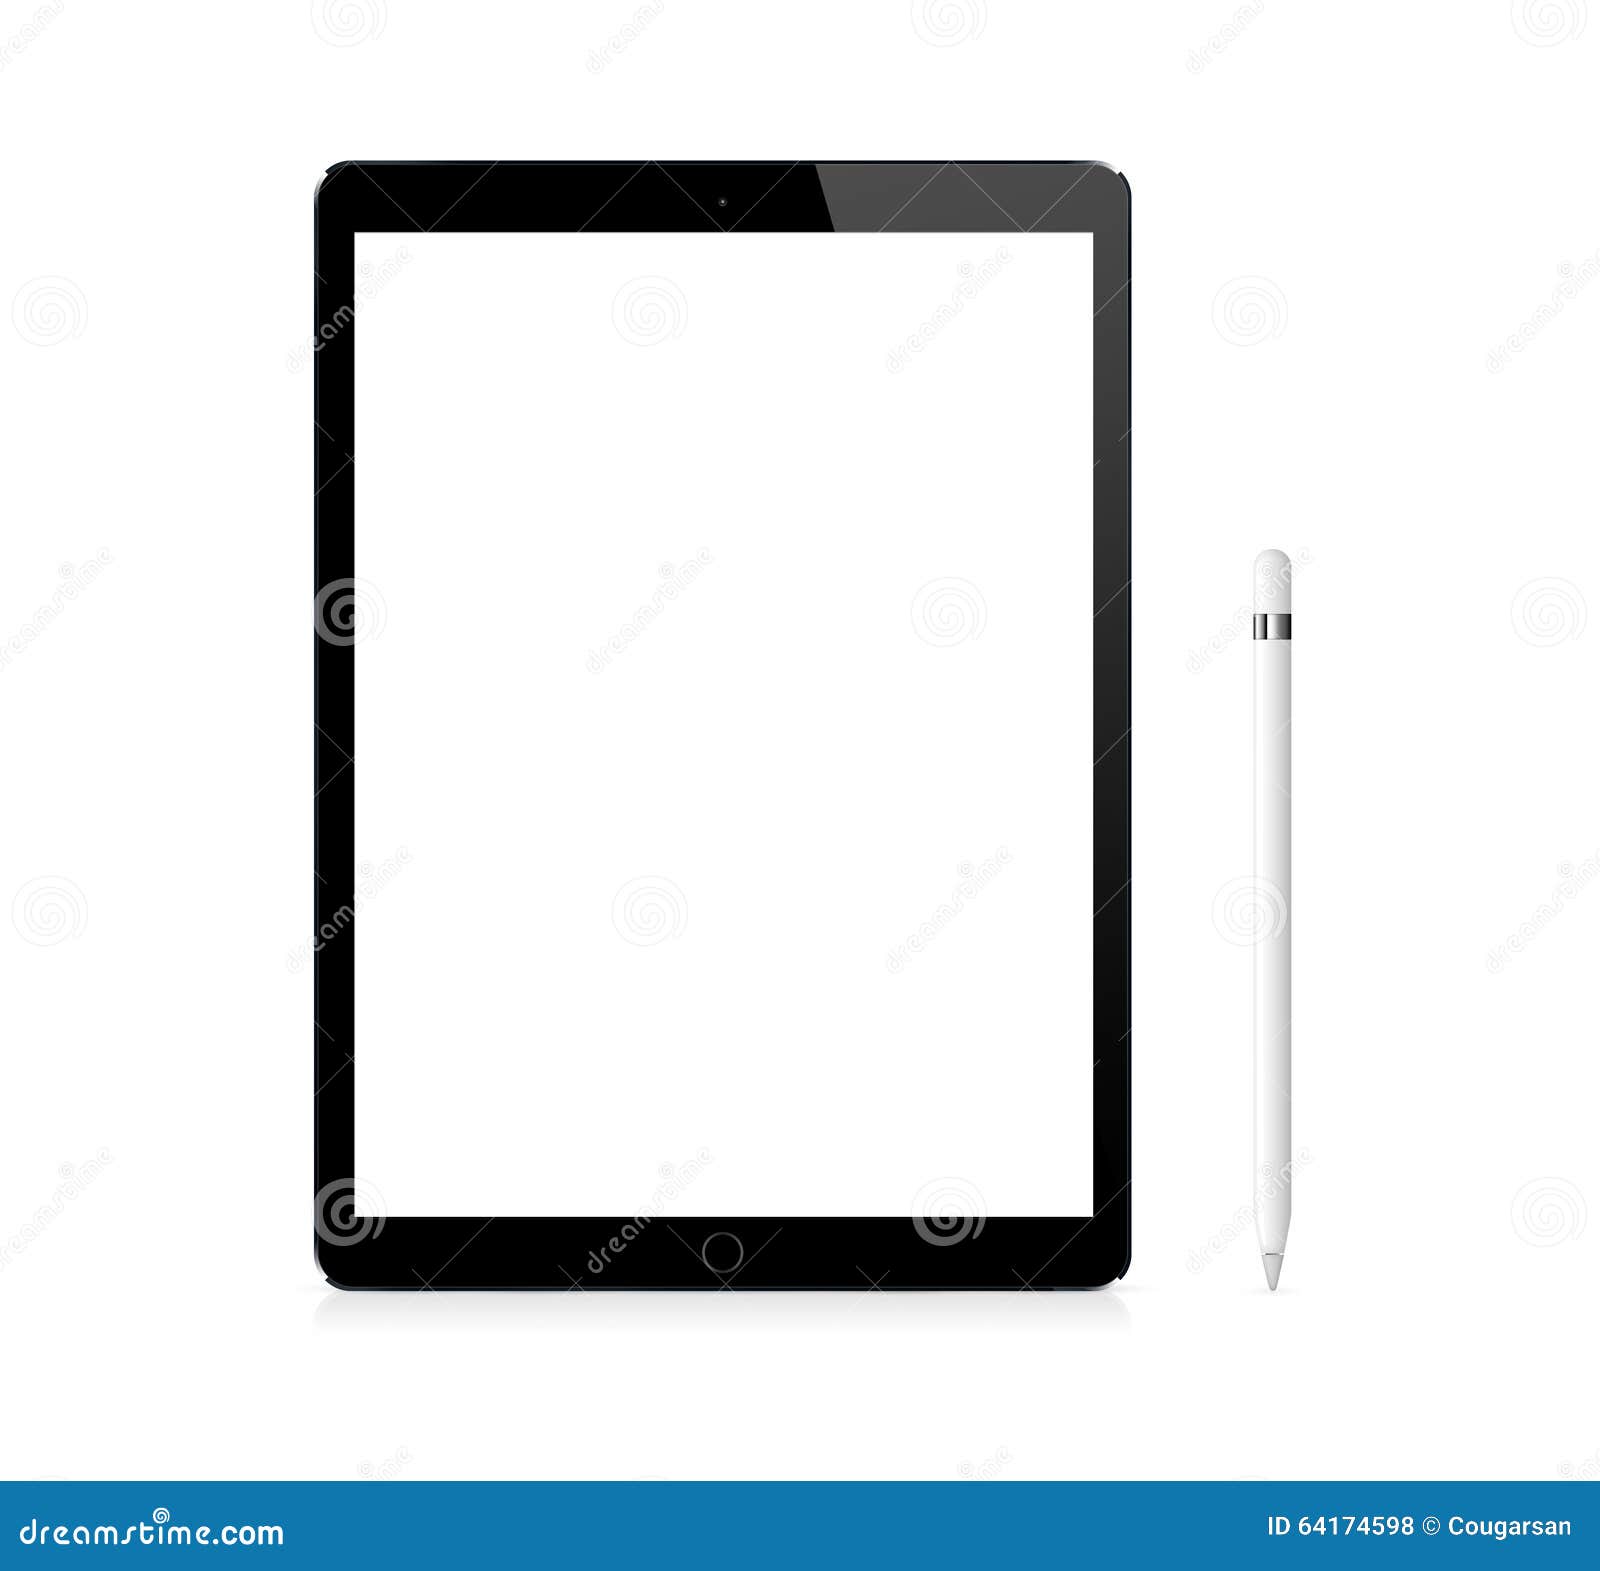 black apple ipad pro portable device with pencil